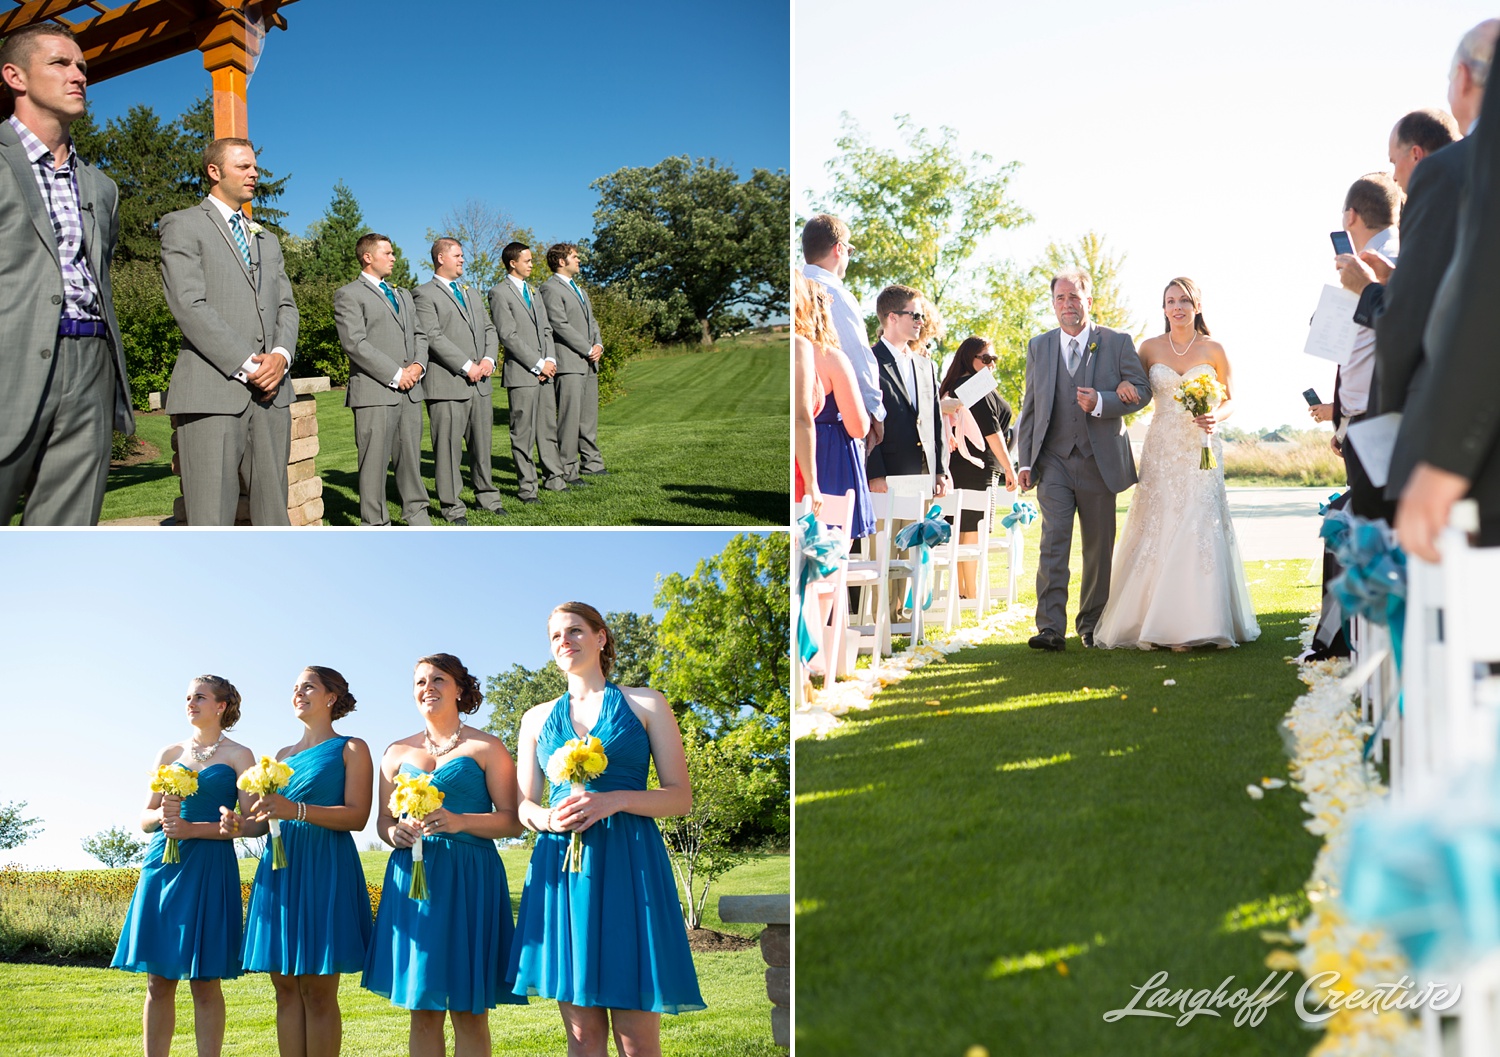 WeddingPhotography-WisconsinWedding-StrawberryCreek-LanghoffCreative-Brumm9-photo.jpg